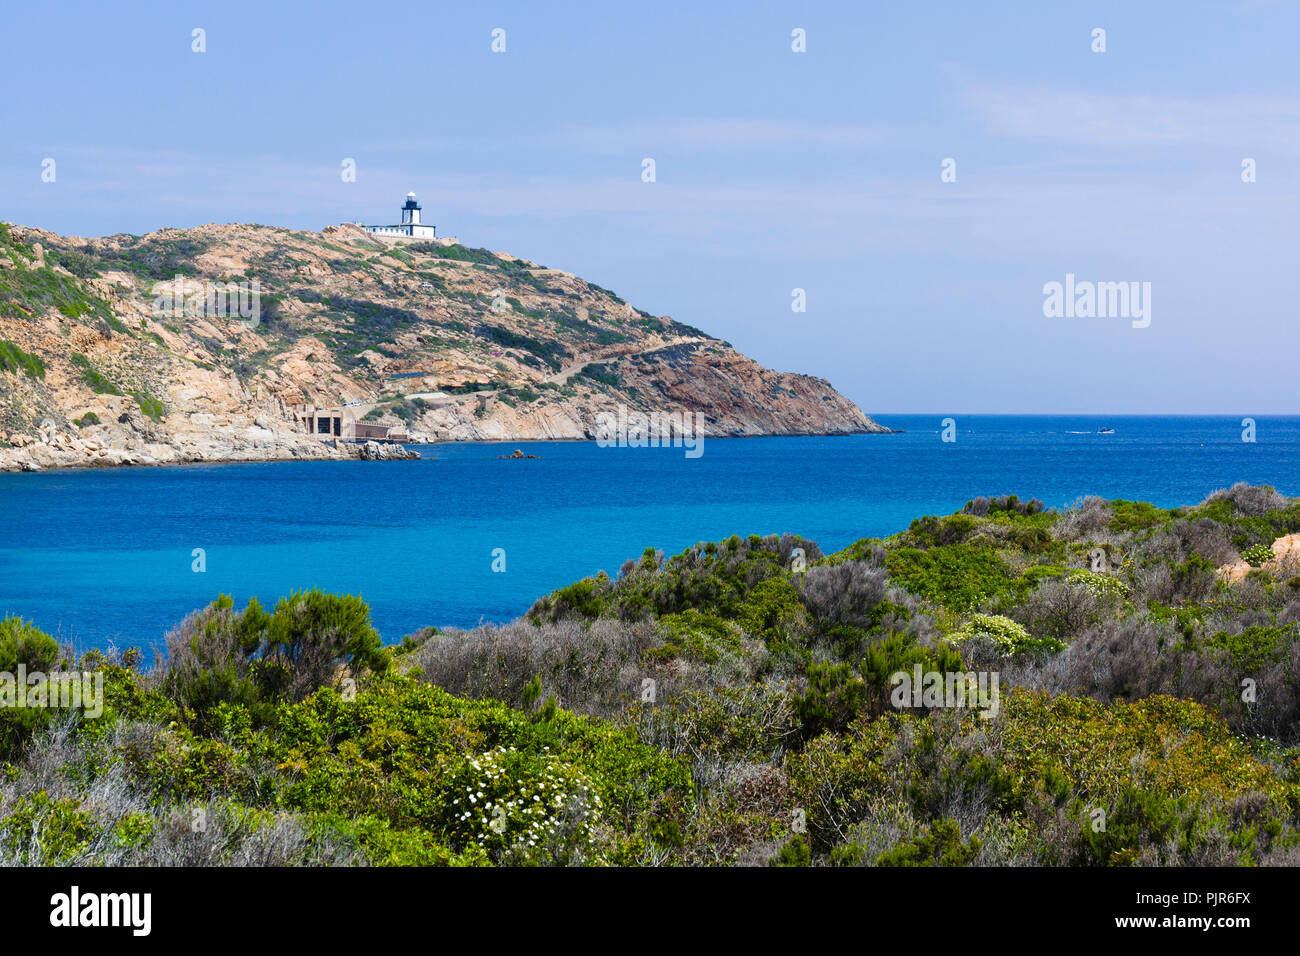 Lighthouse, Pointe de la Revellata, Calvi, Corsica, France Stock Photo